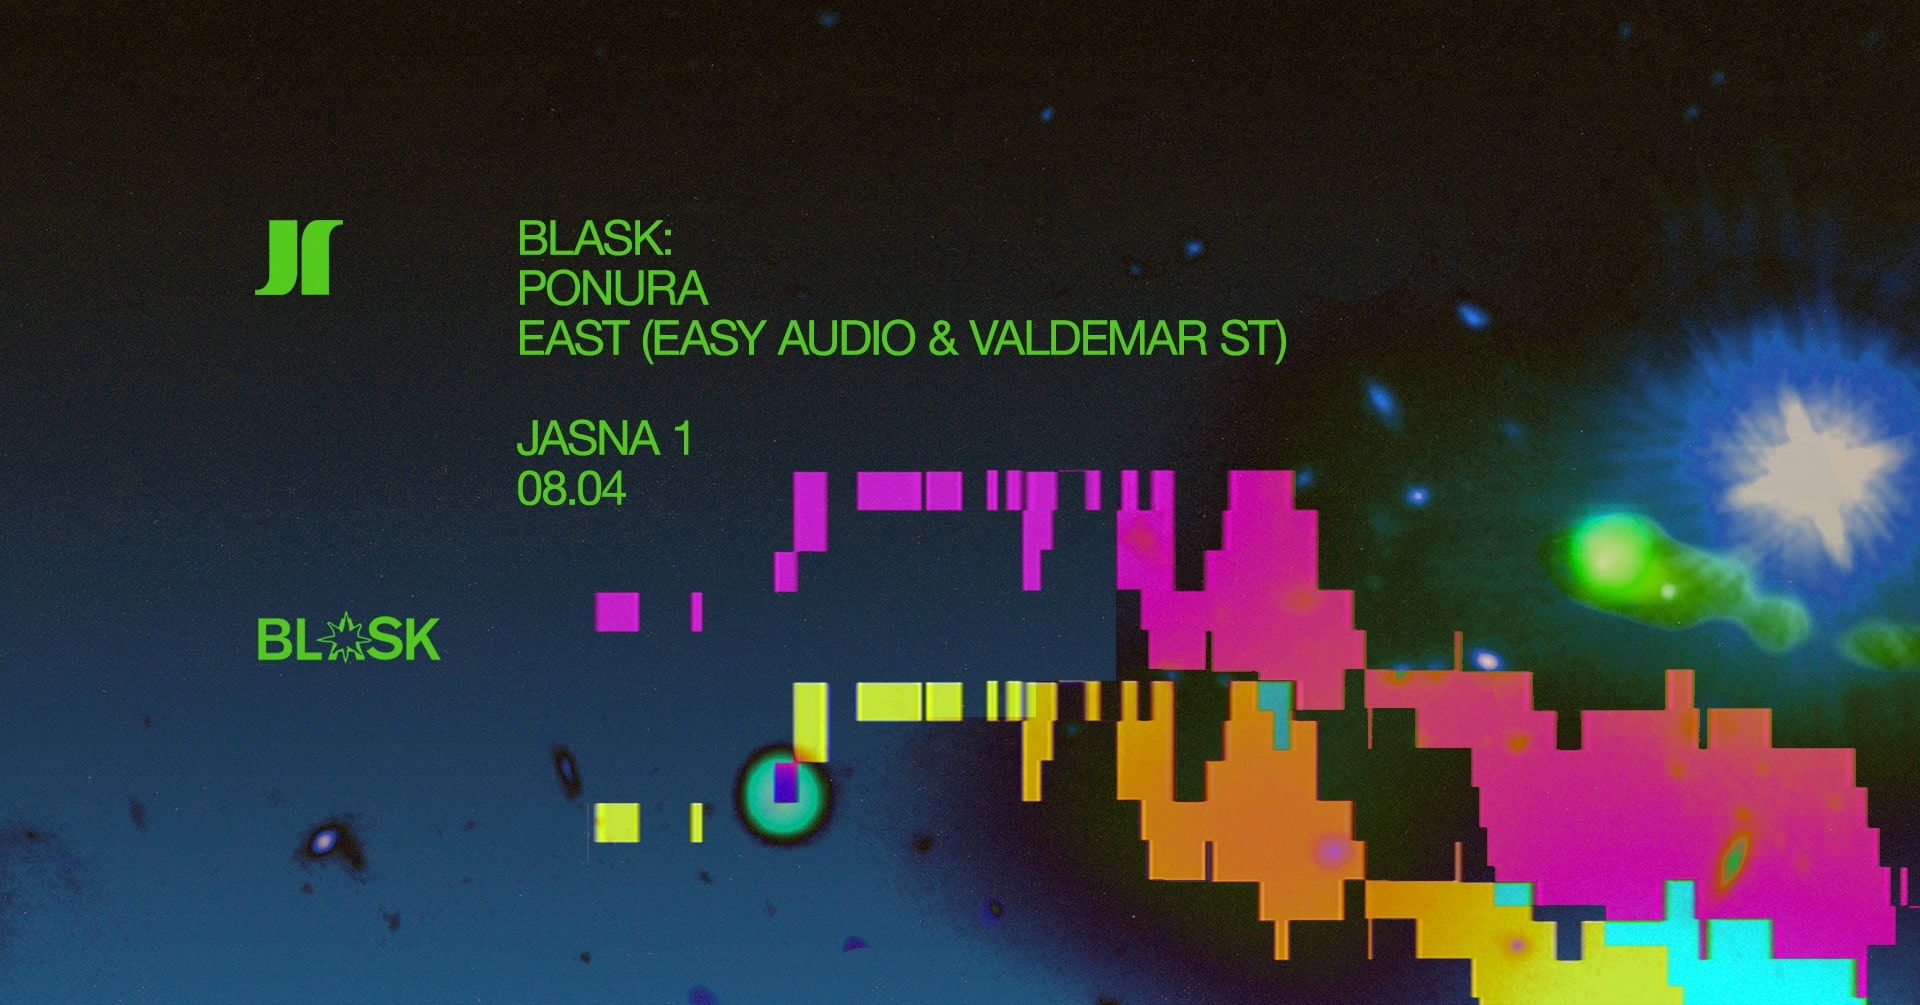 J1 | BLASK: Ponura, EAST (Easy Audio & Valdemar ST)